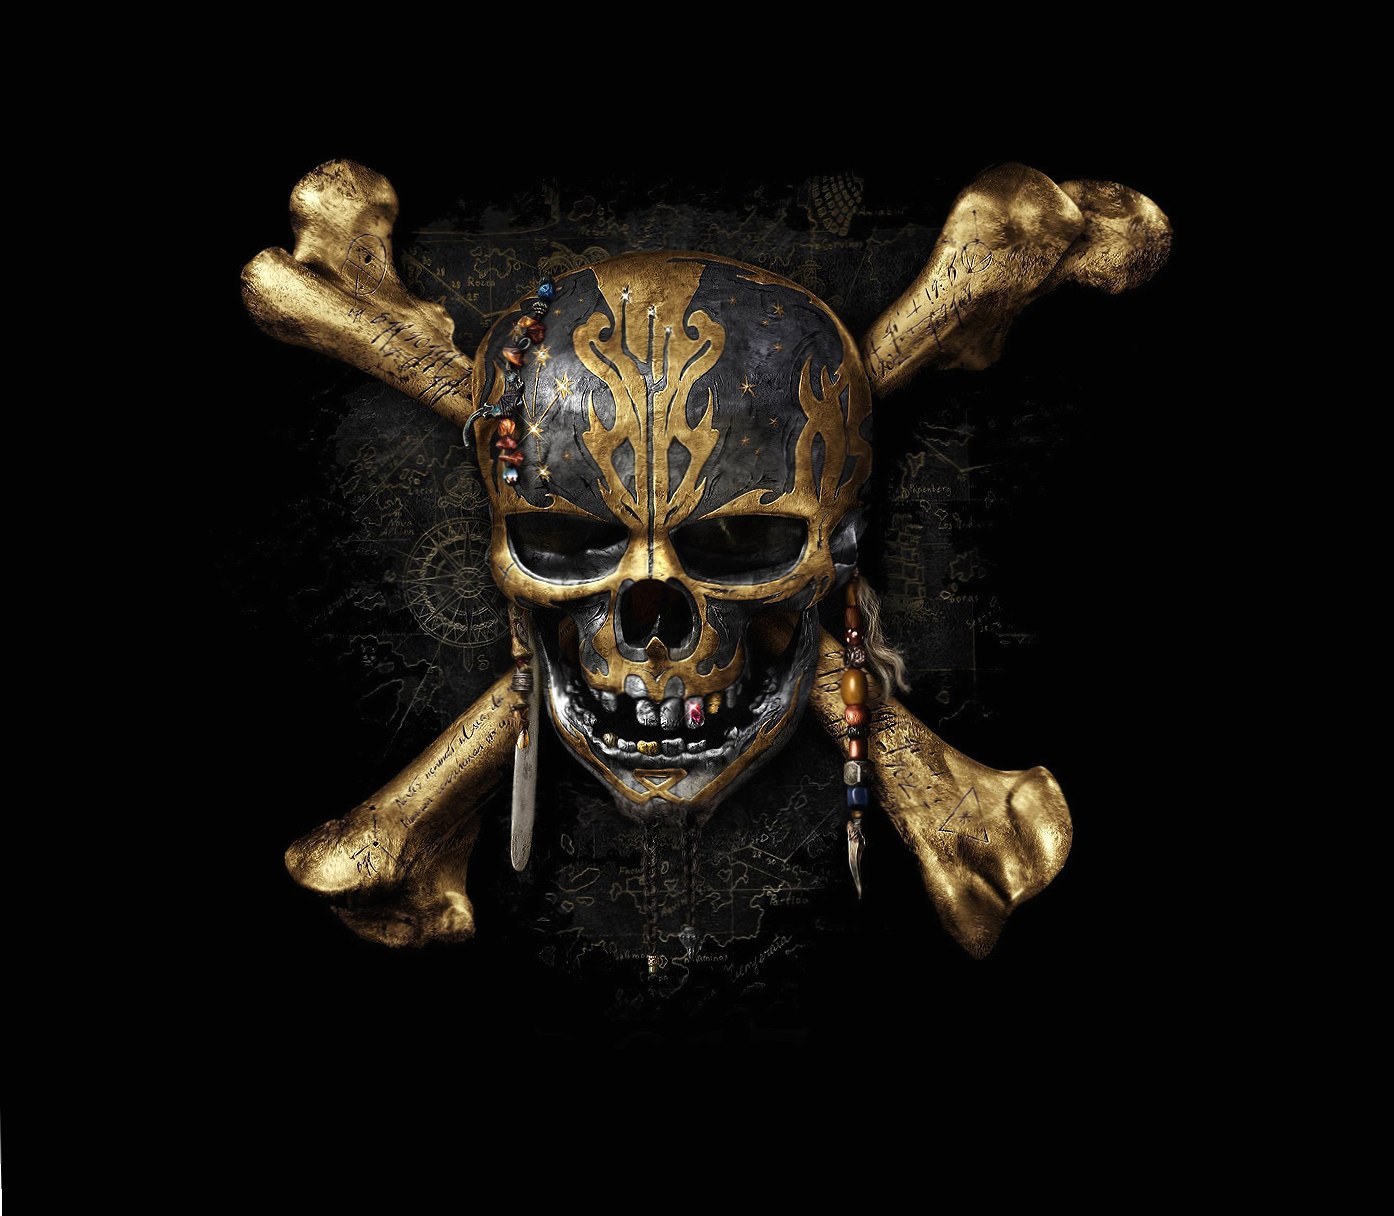 Caribbean Skull at 2048 x 2048 iPad size wallpapers HD quality